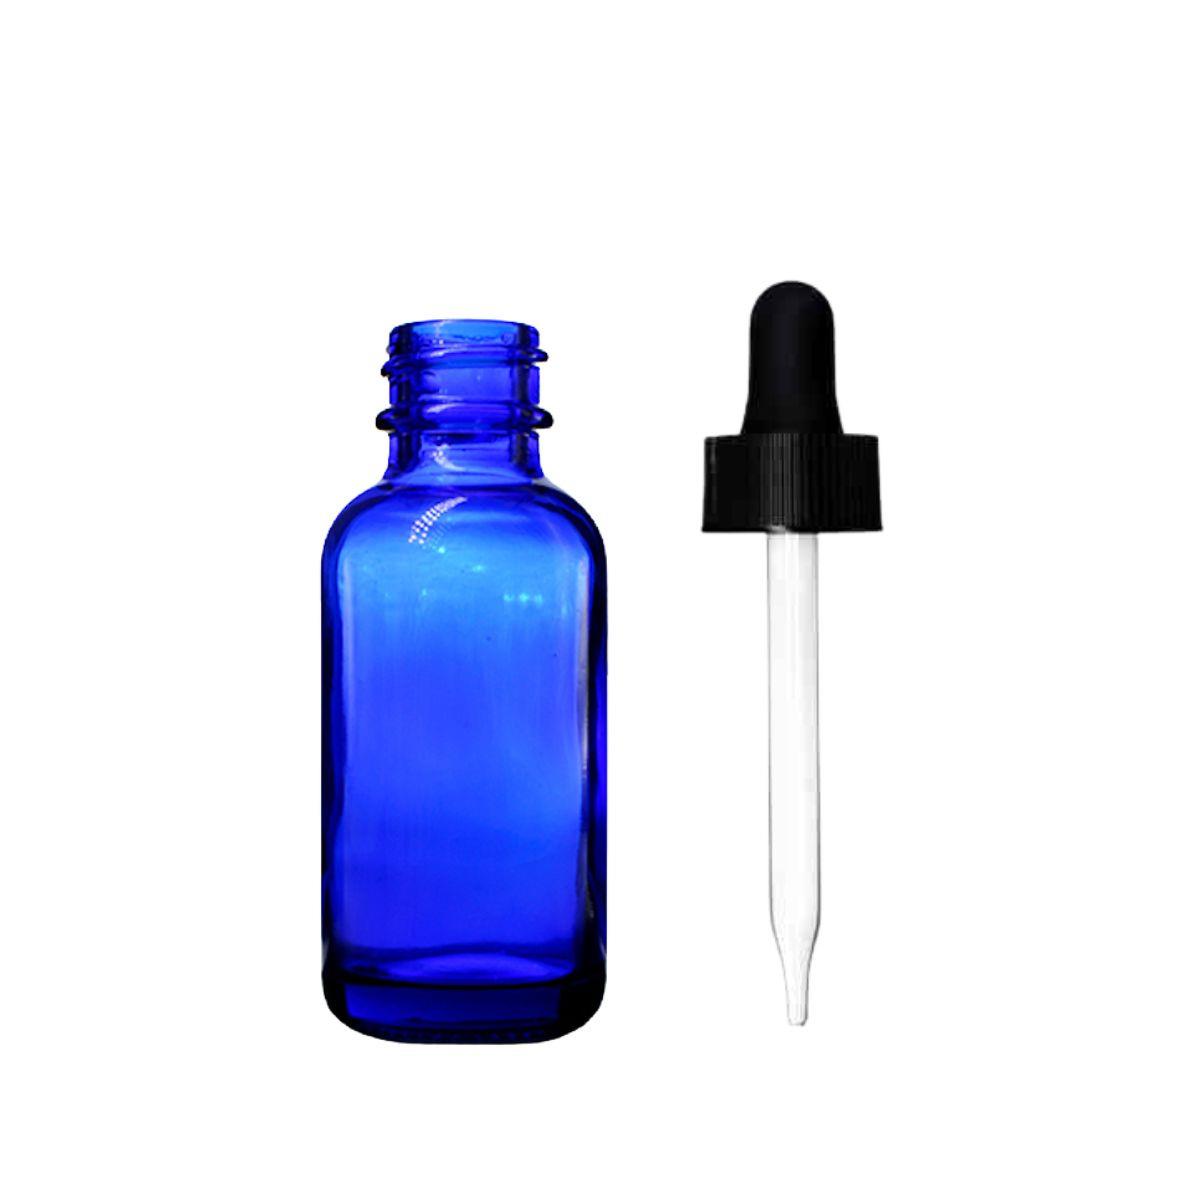 1 oz Blue Bottle with Dropper